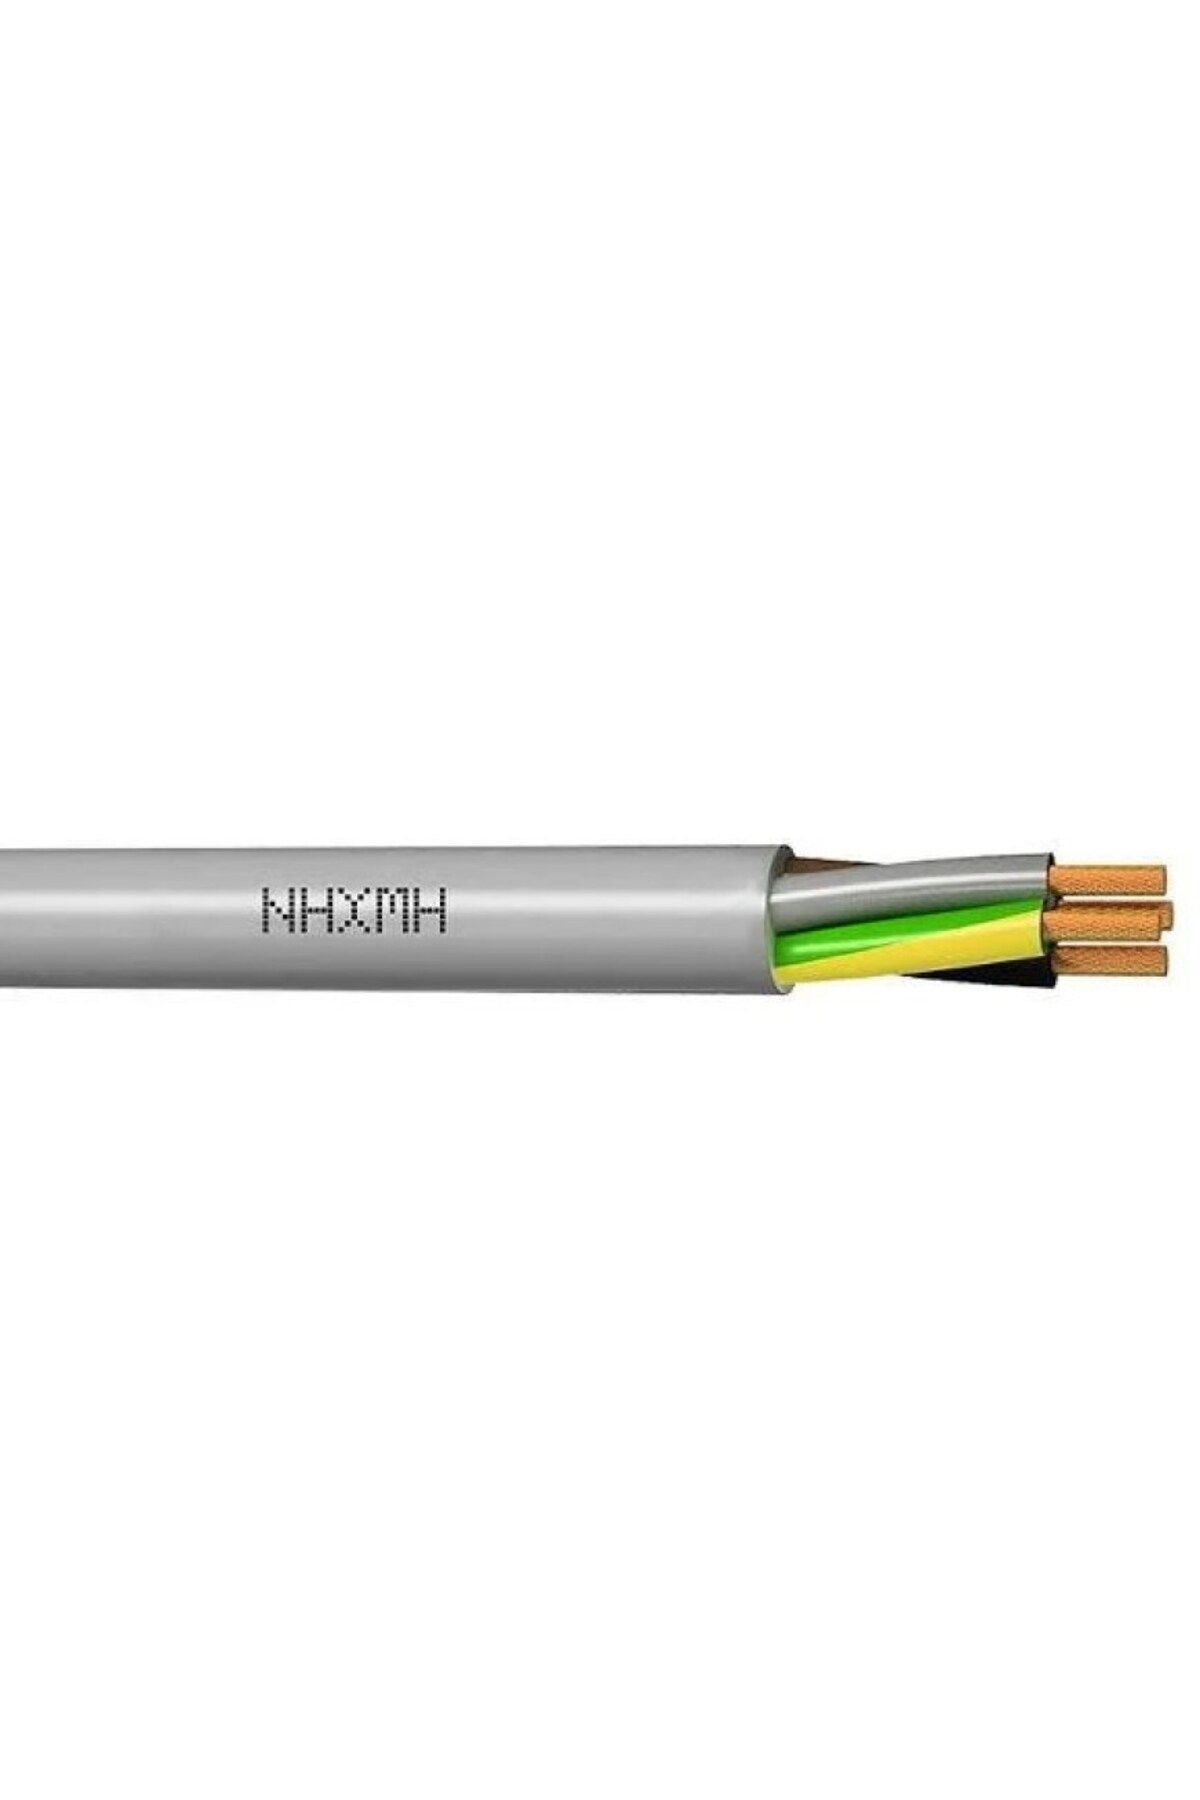 ÖZNUR 60 Metre 5x2.5 NHXMH Halogen Free Kablo Öznur Kablo